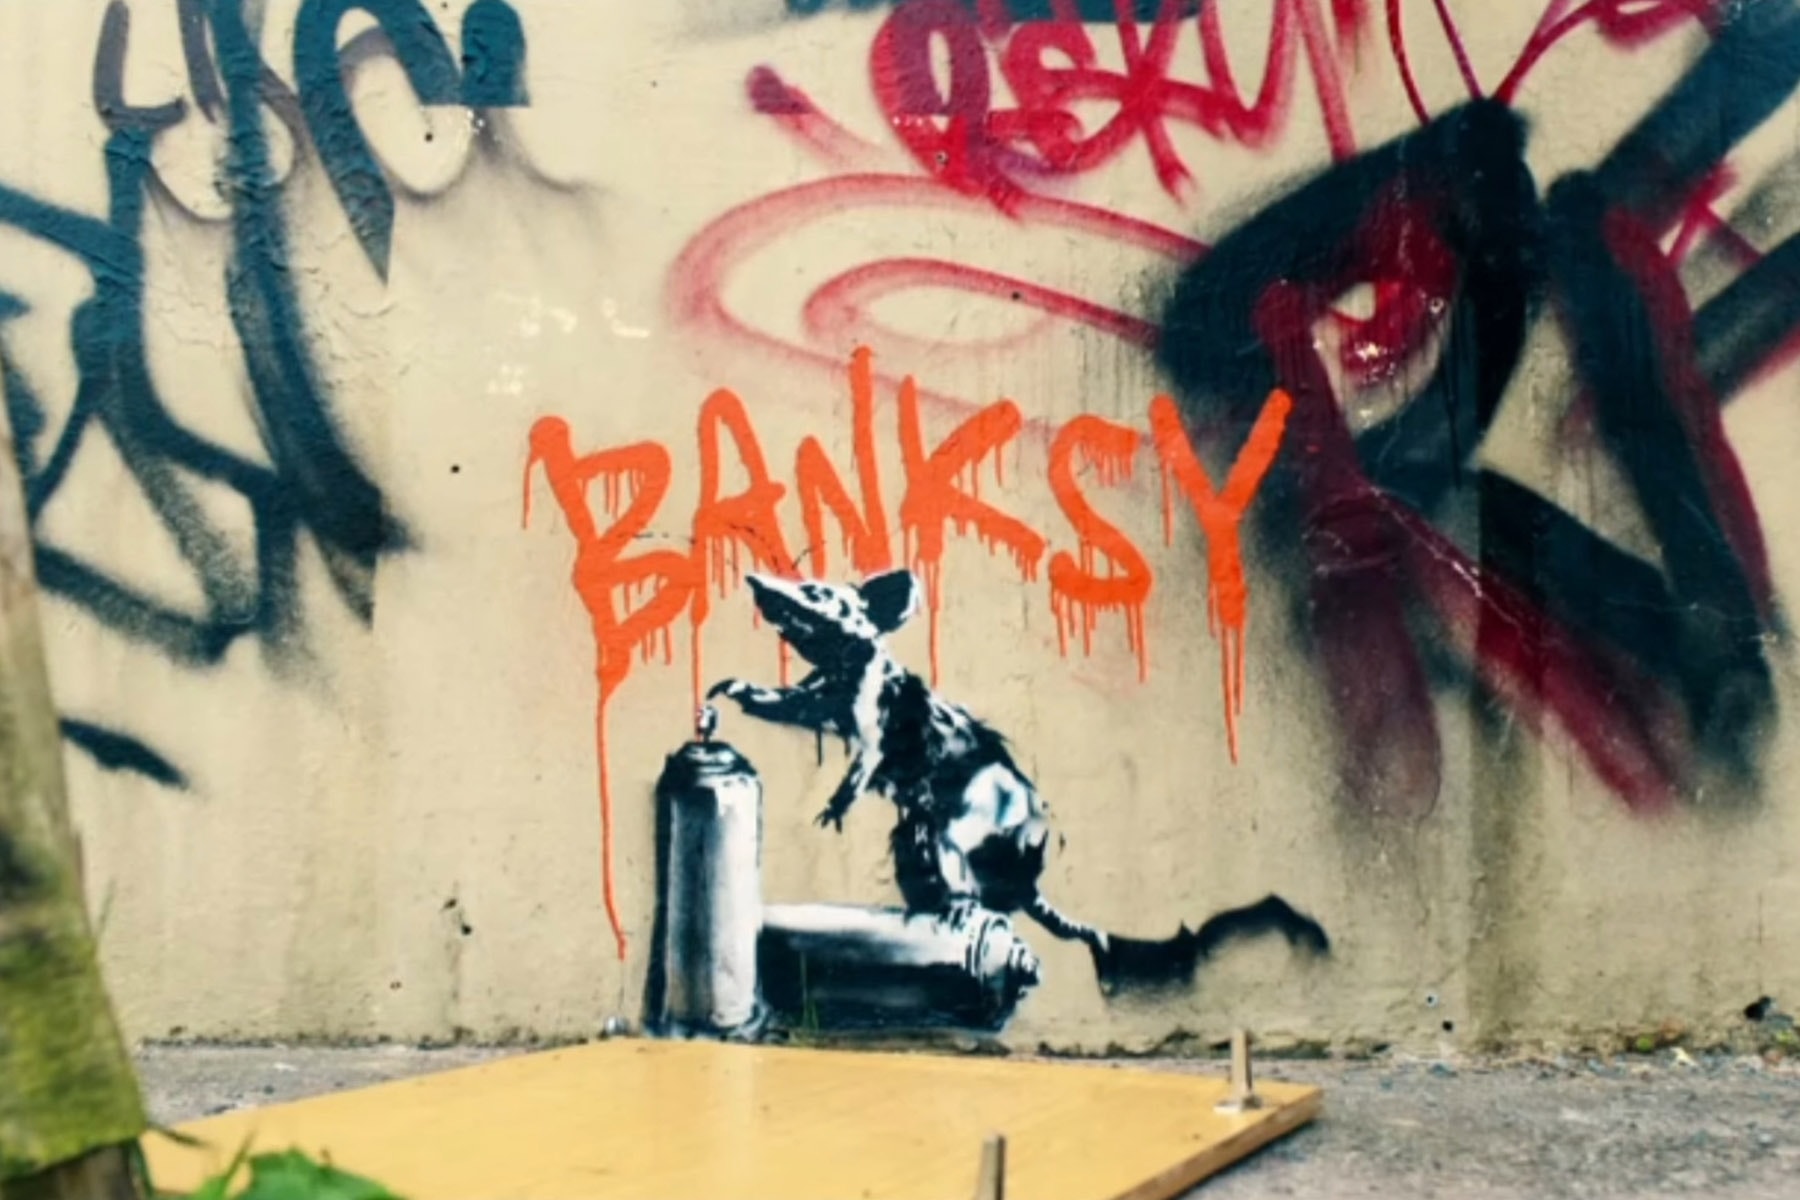 Christopher Walken 因拍攝需求銷毀 Banksy 塗鴉作品